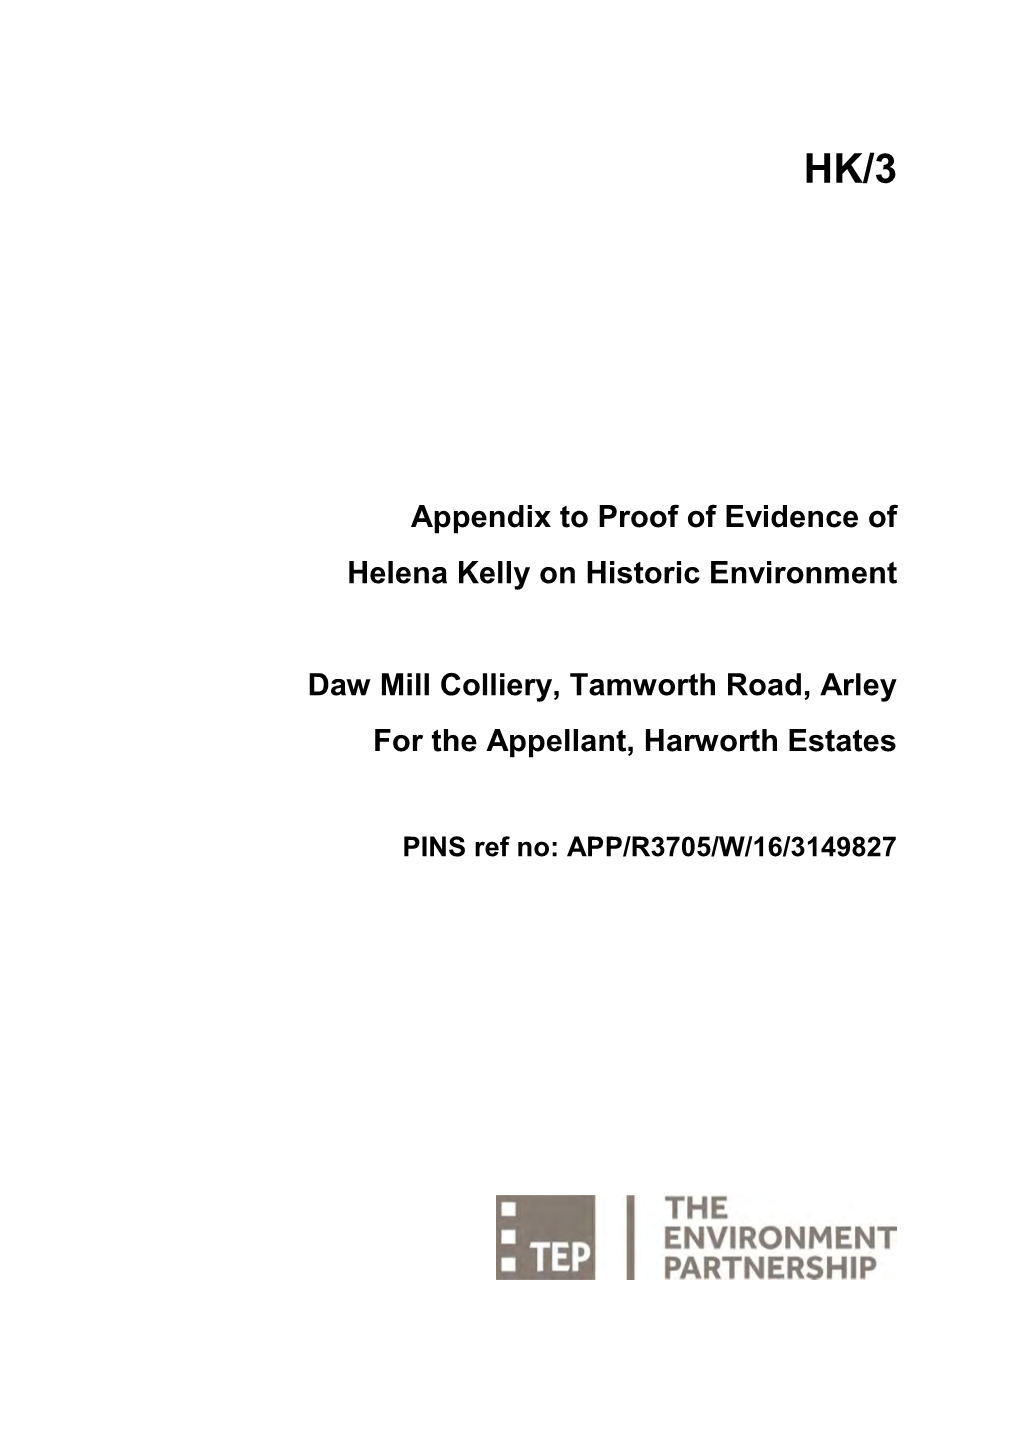 Historic Environment Assessment